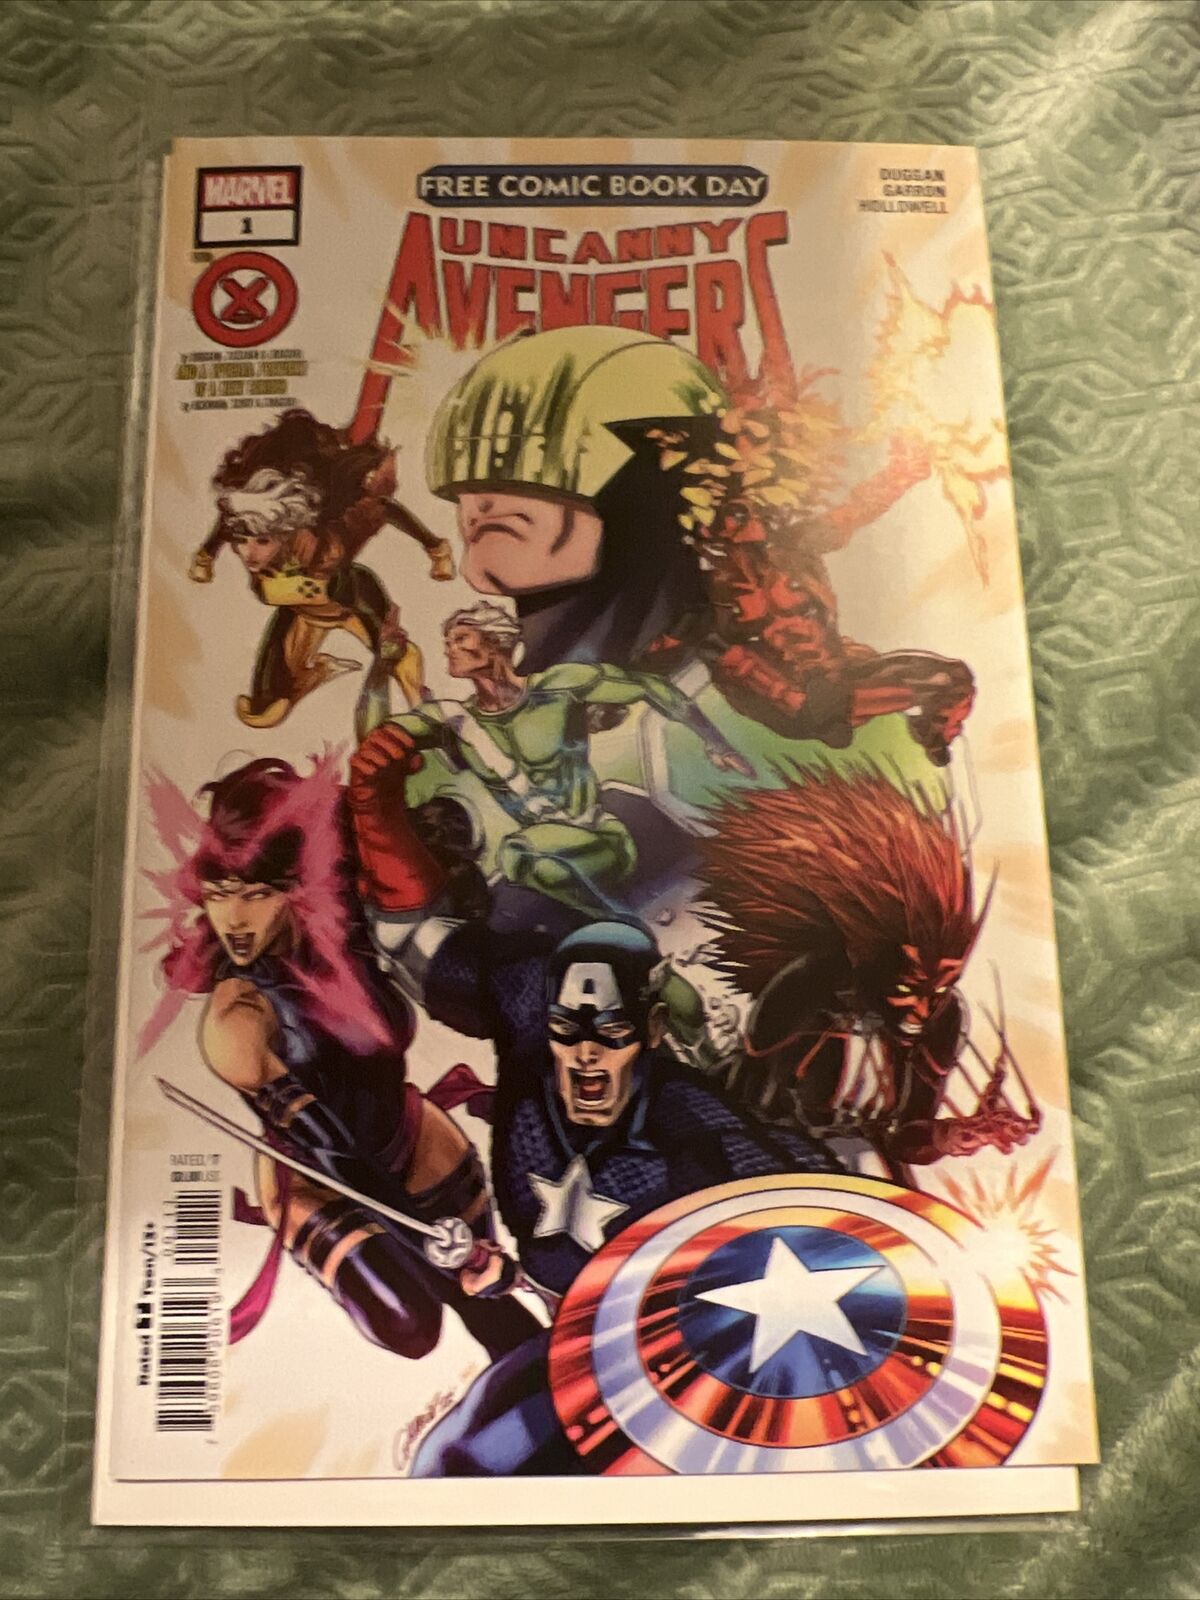 Marvel Uncanny Avengers #1 FCBD 2023 No Stamp/Sticker Will Combine Shipping